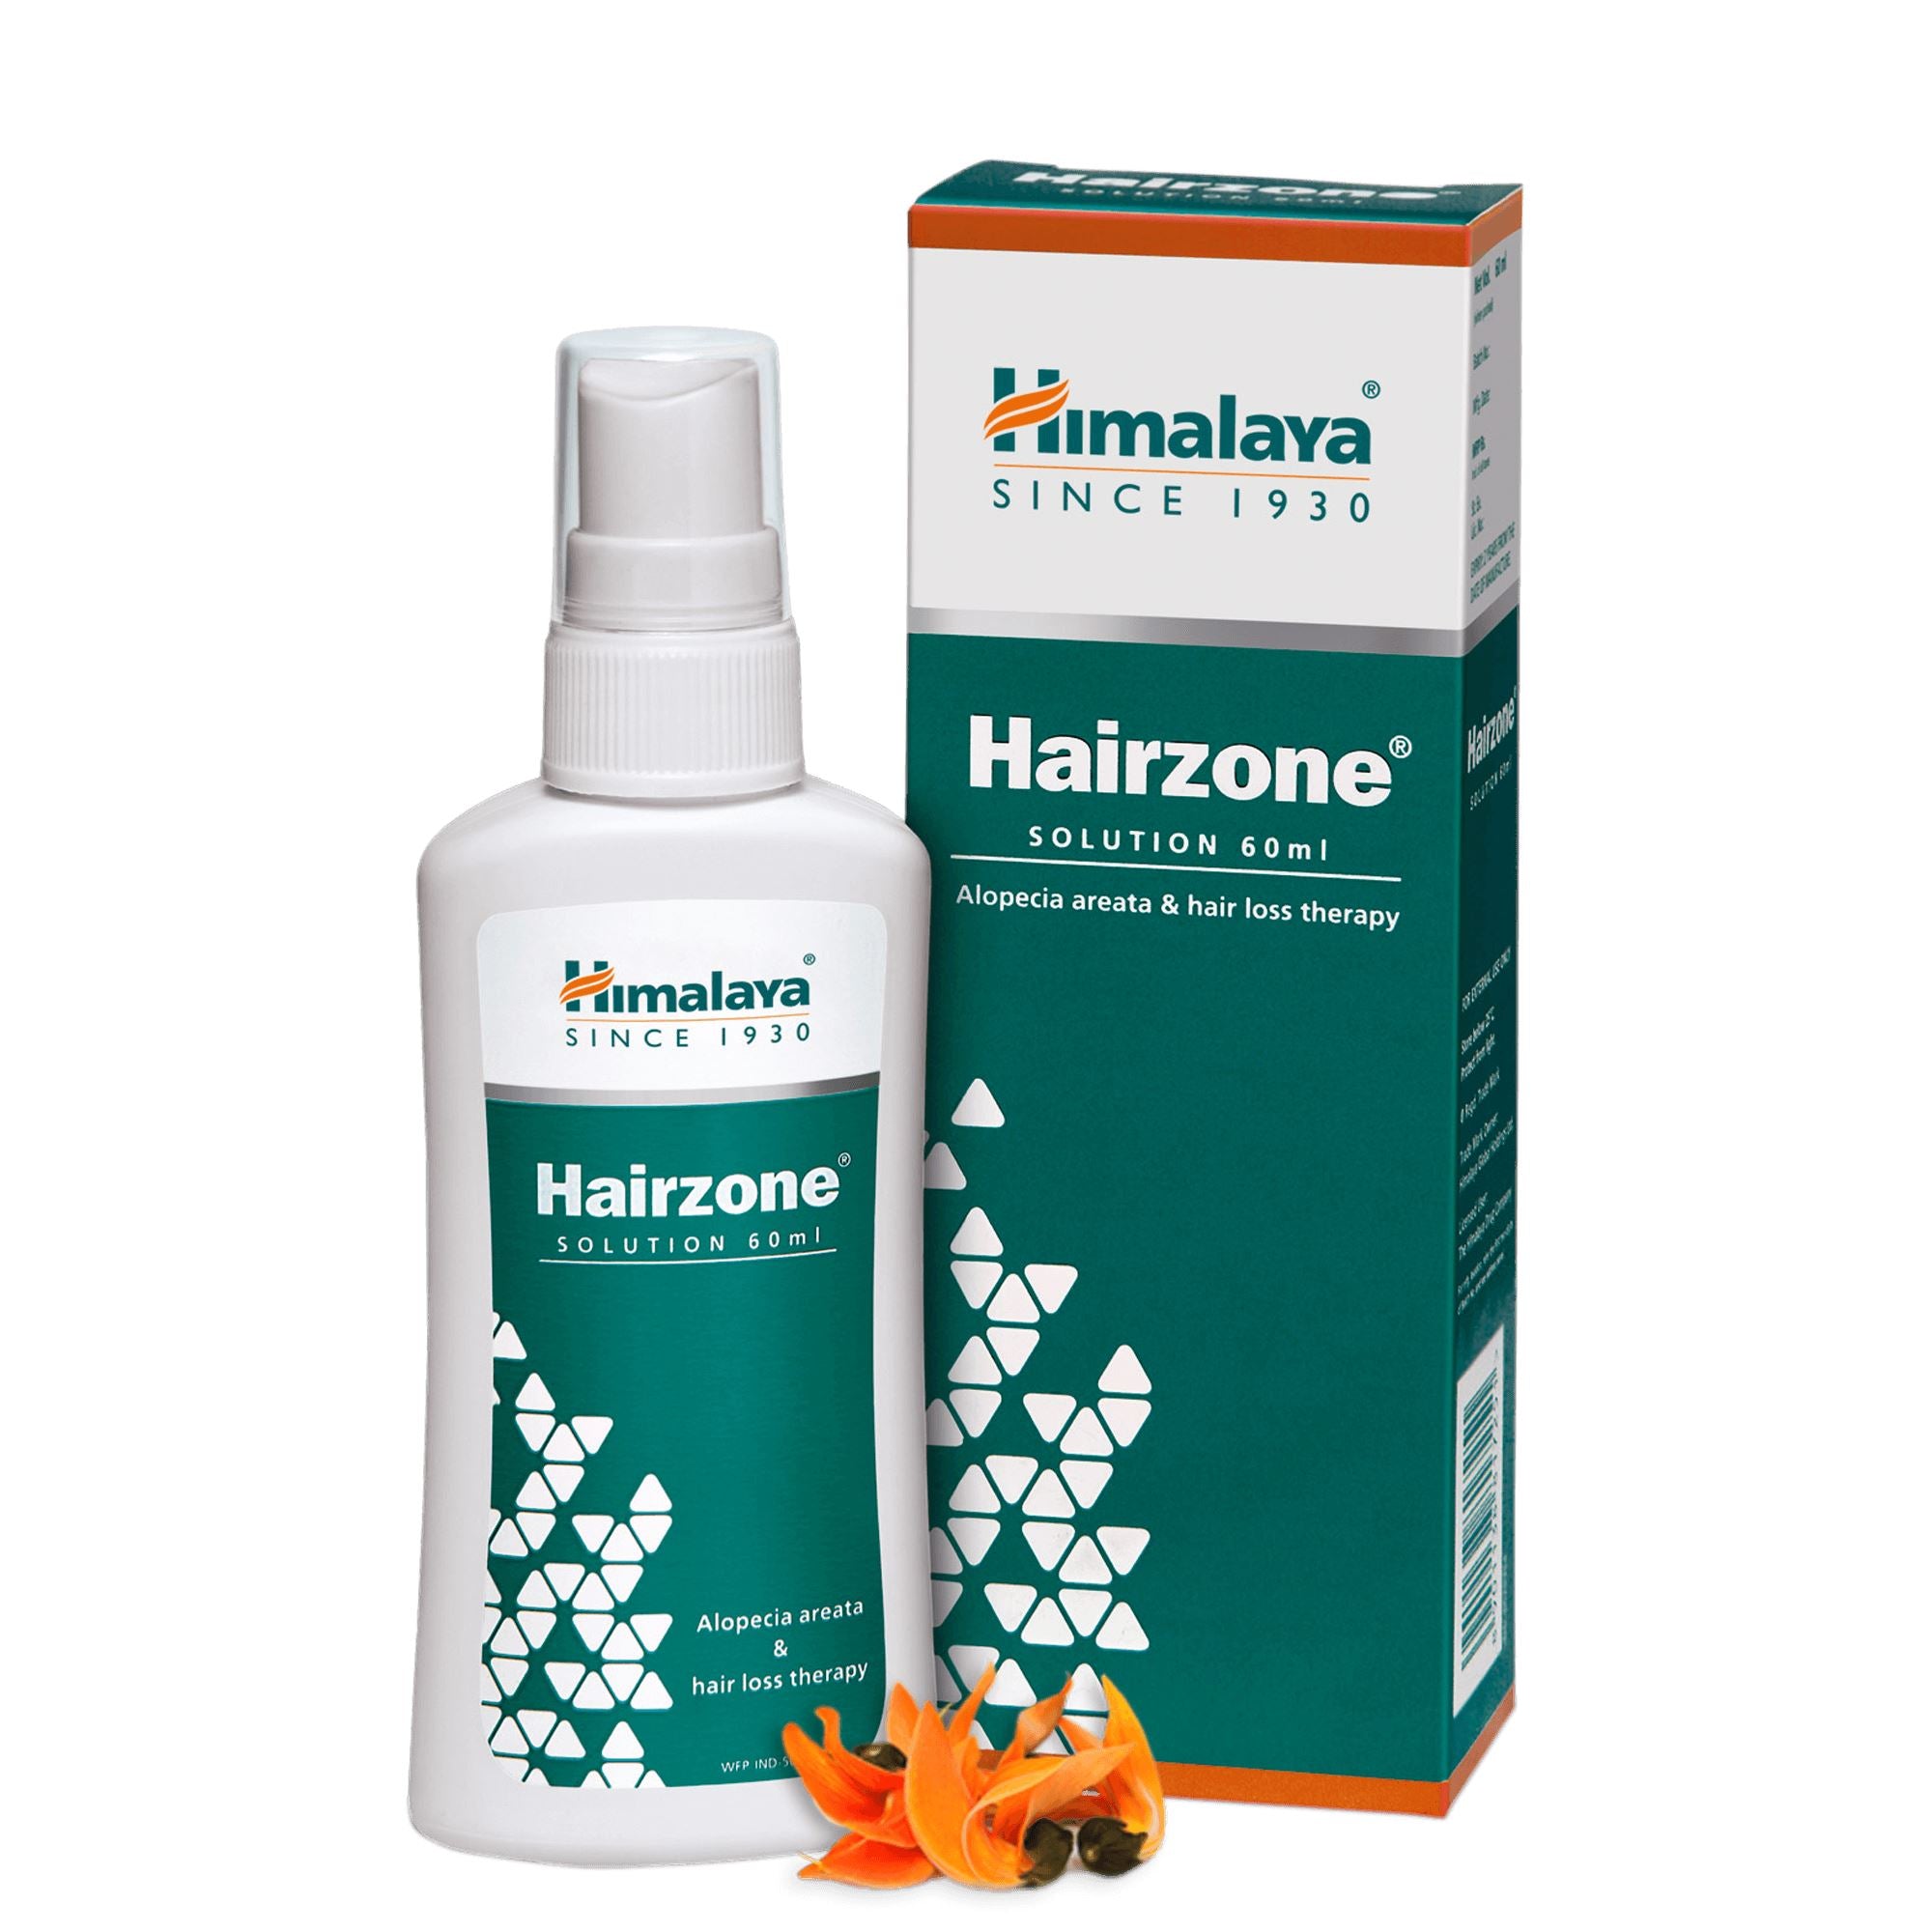 Средство против роста волос. Hairzone solution 60. Хэйрзон hairzone. Himalaya since 1930. Средство от выпадения волос.